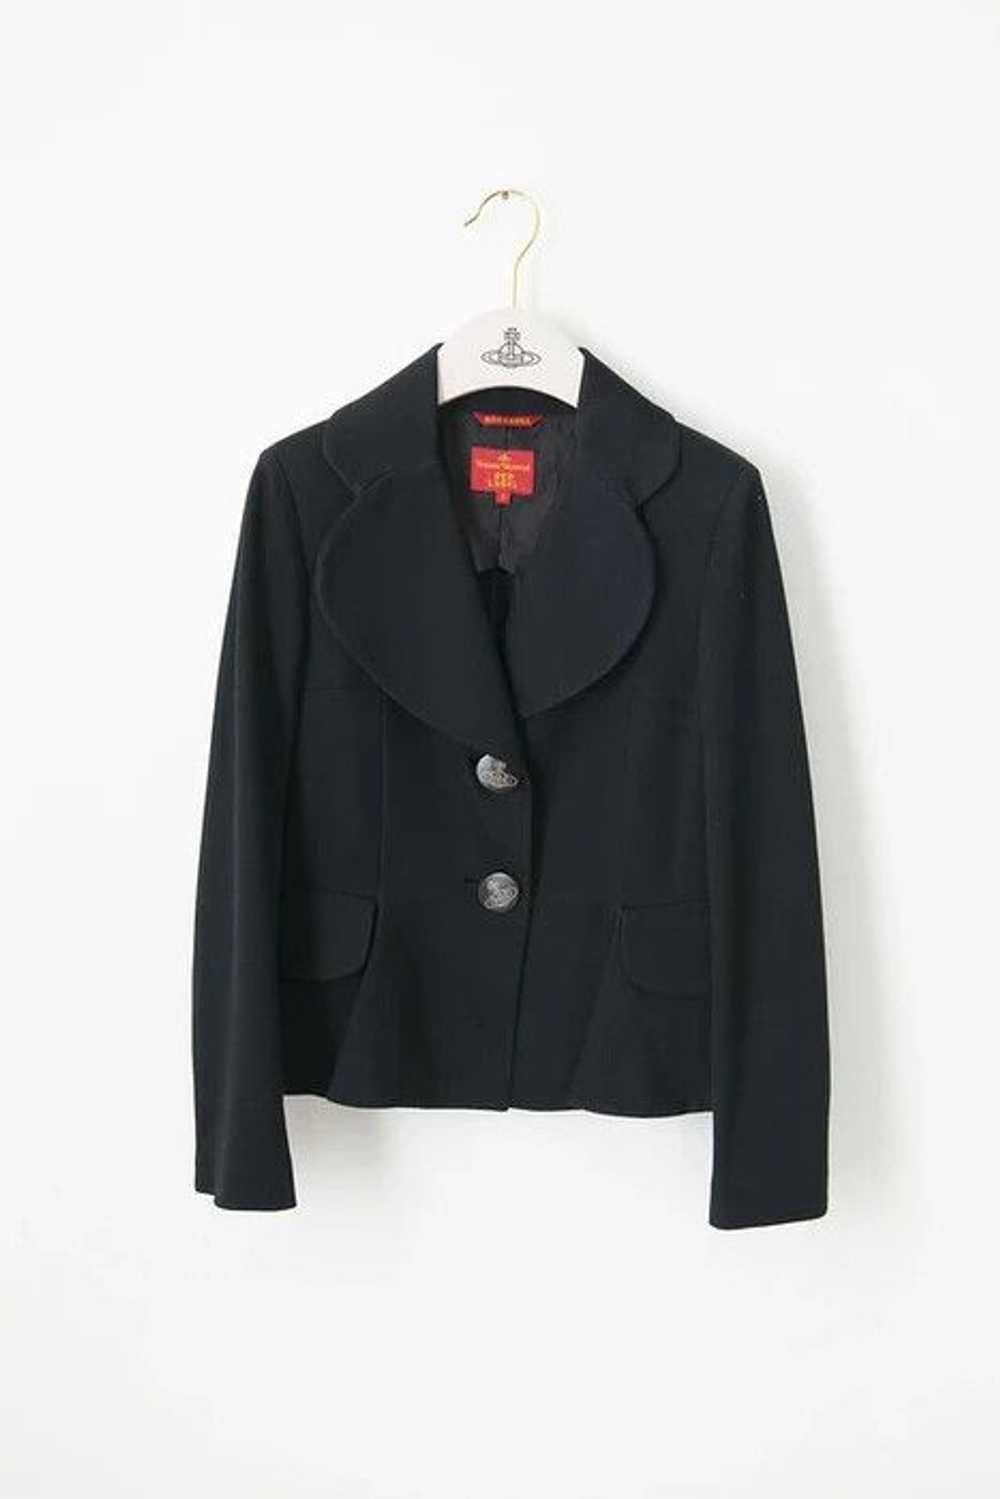 Vivienne Westwood Vintage blazer - image 1